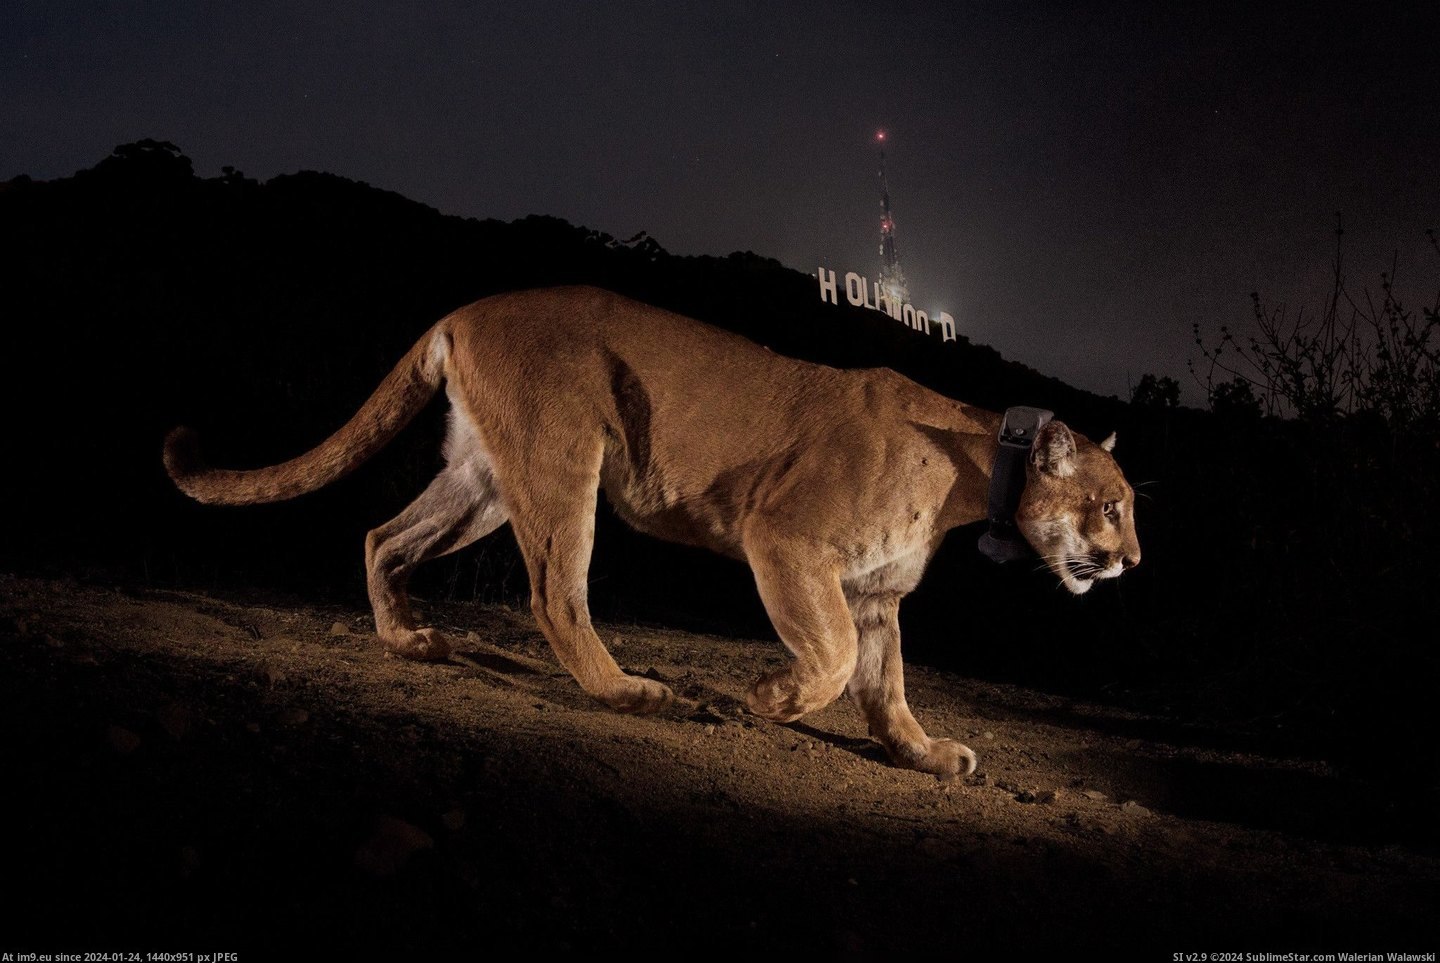 #Hollywood  #Cougar [Pics] A Cougar in Hollywood Pic. (Obraz z album My r/PICS favs))